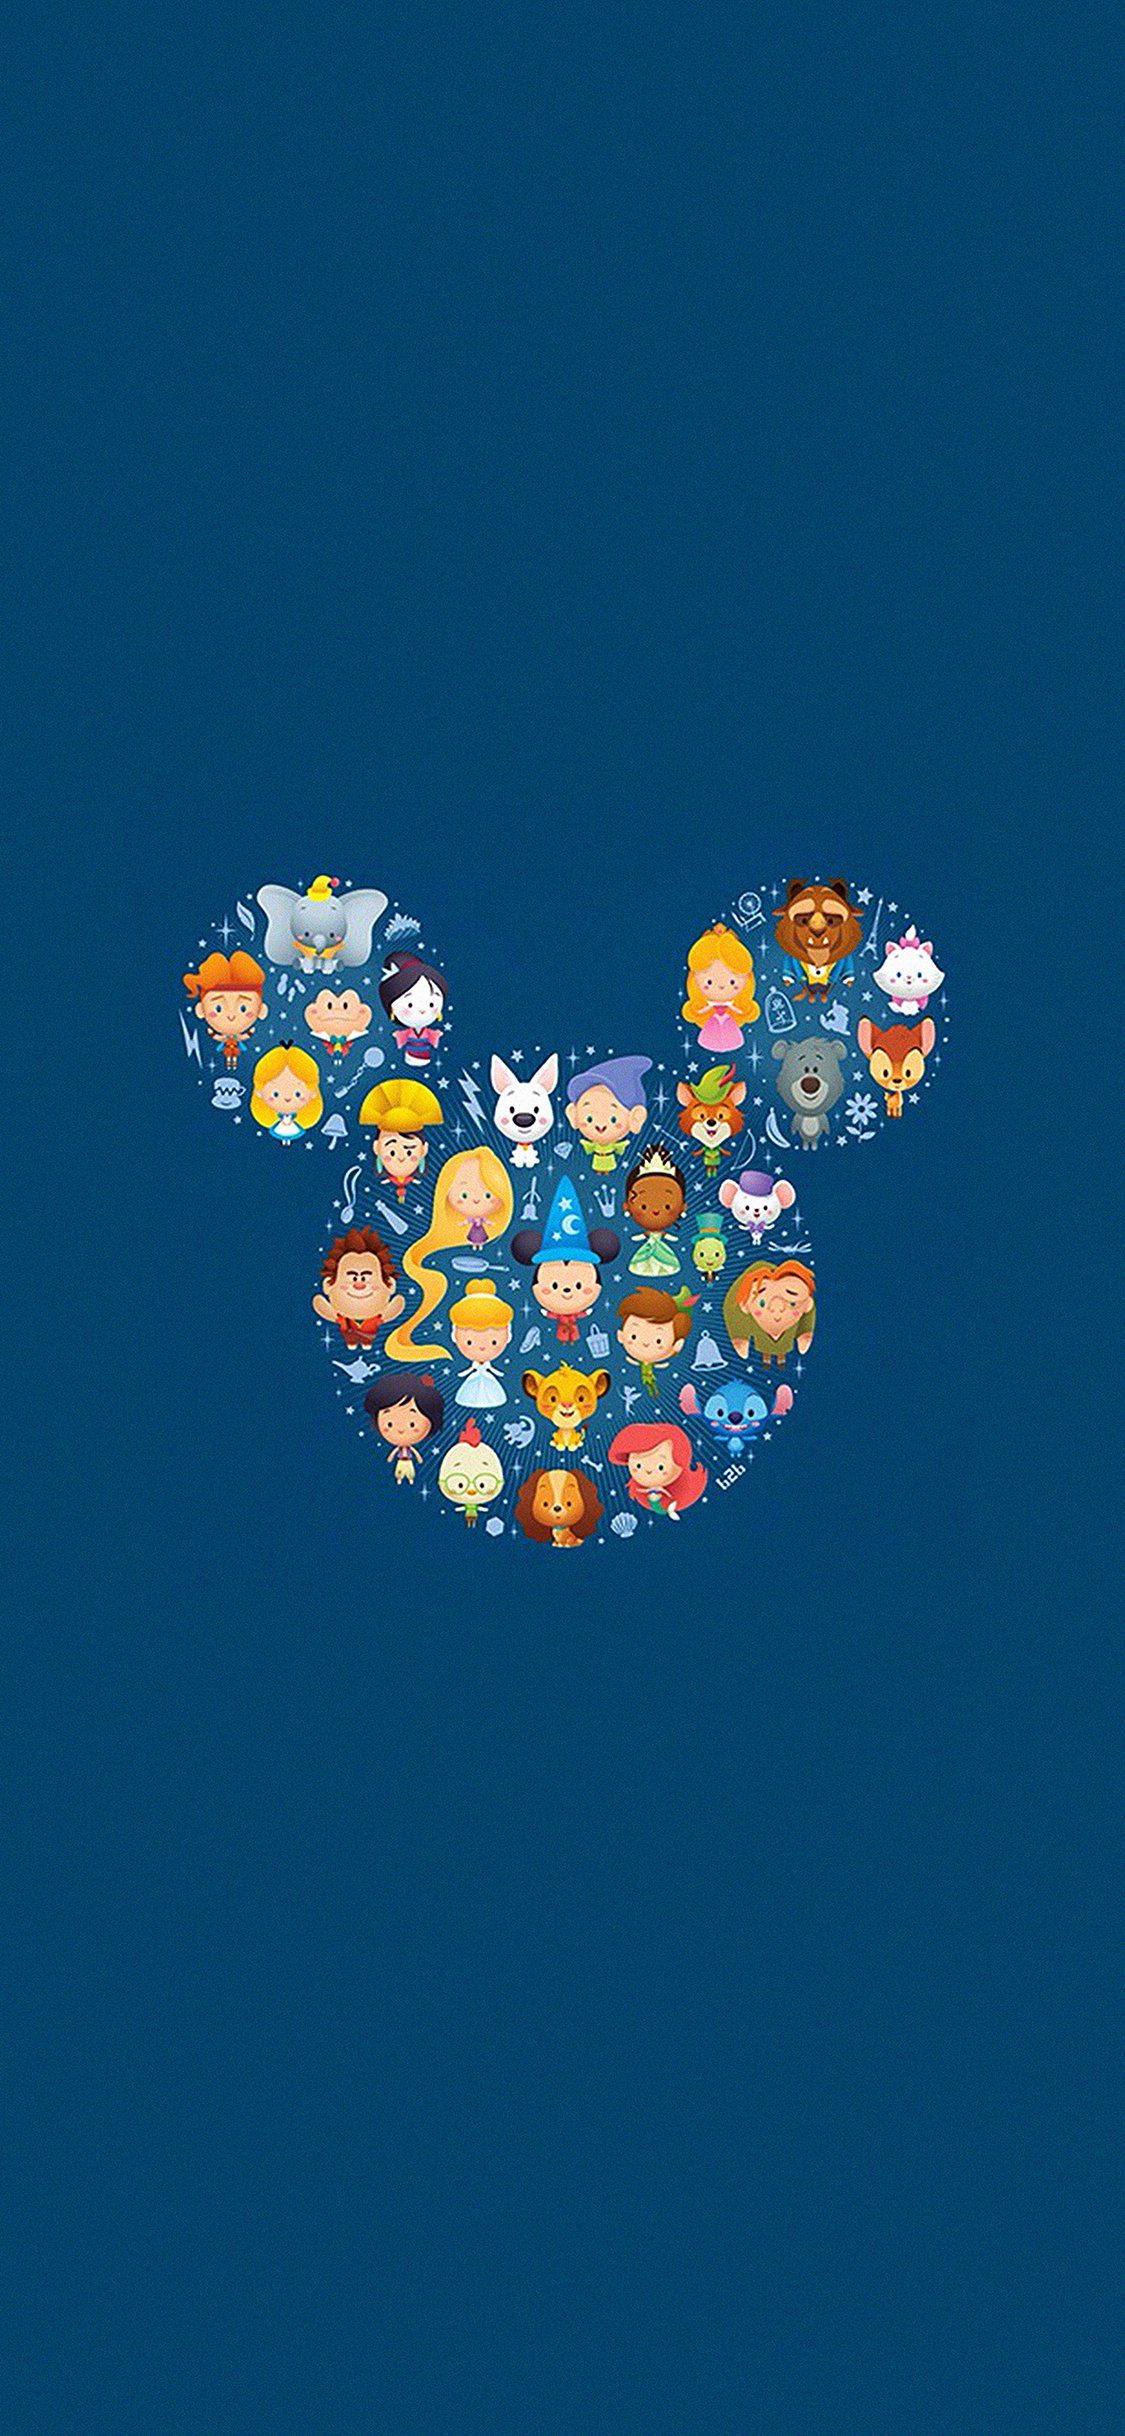 Disney art character cute iPhone X Wallpaper Free Download